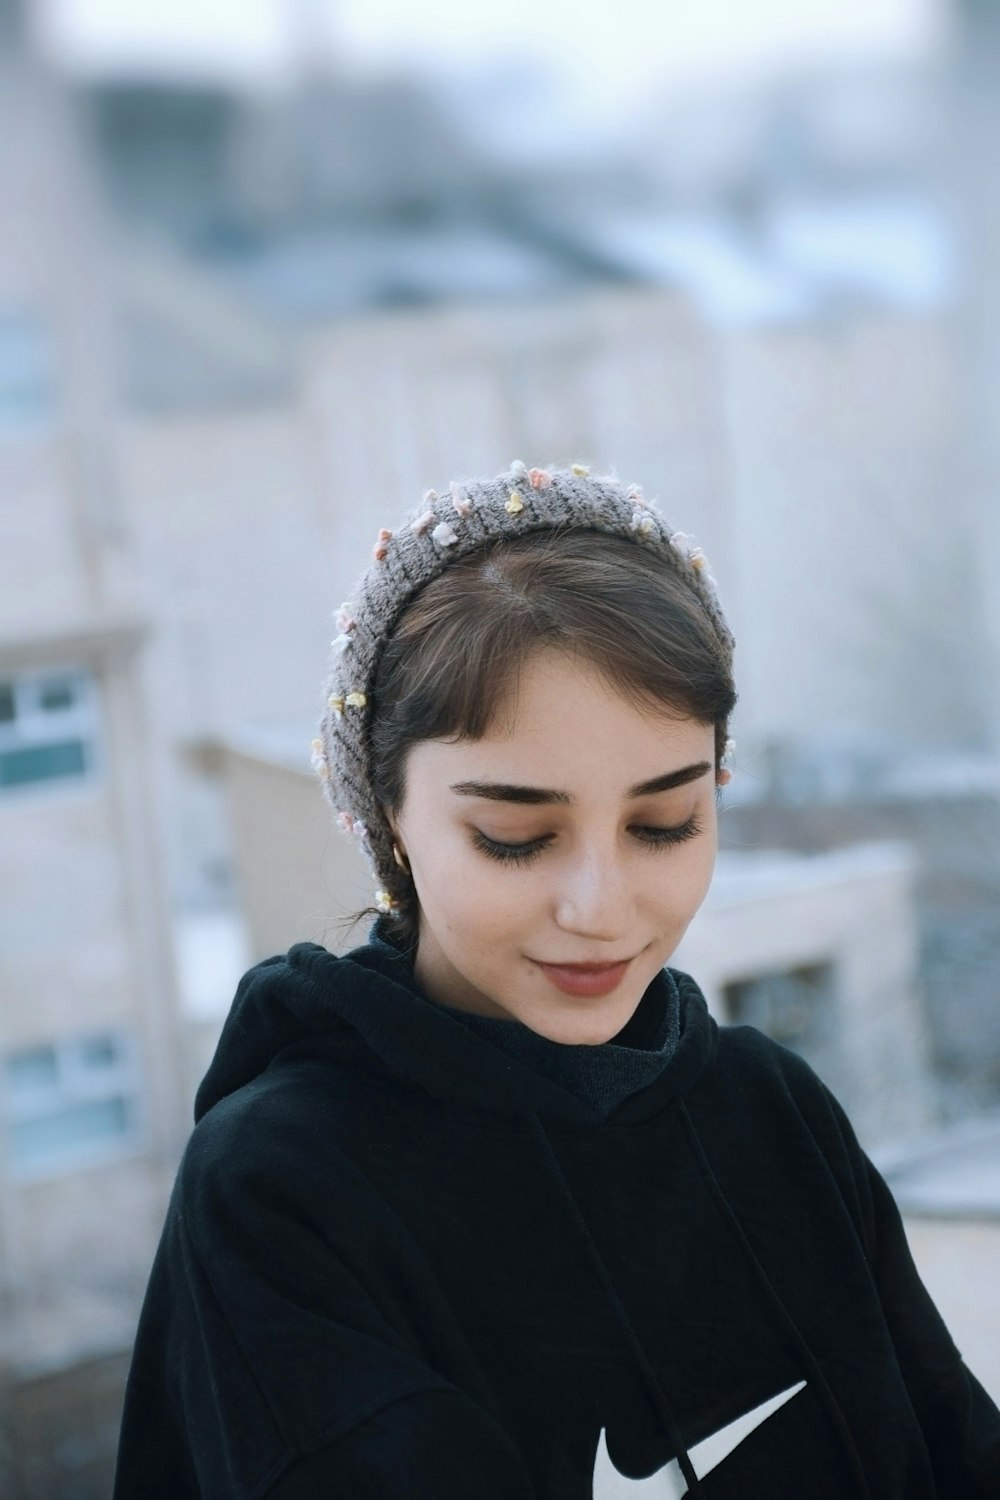 a woman wearing a black sweatshirt and a headband